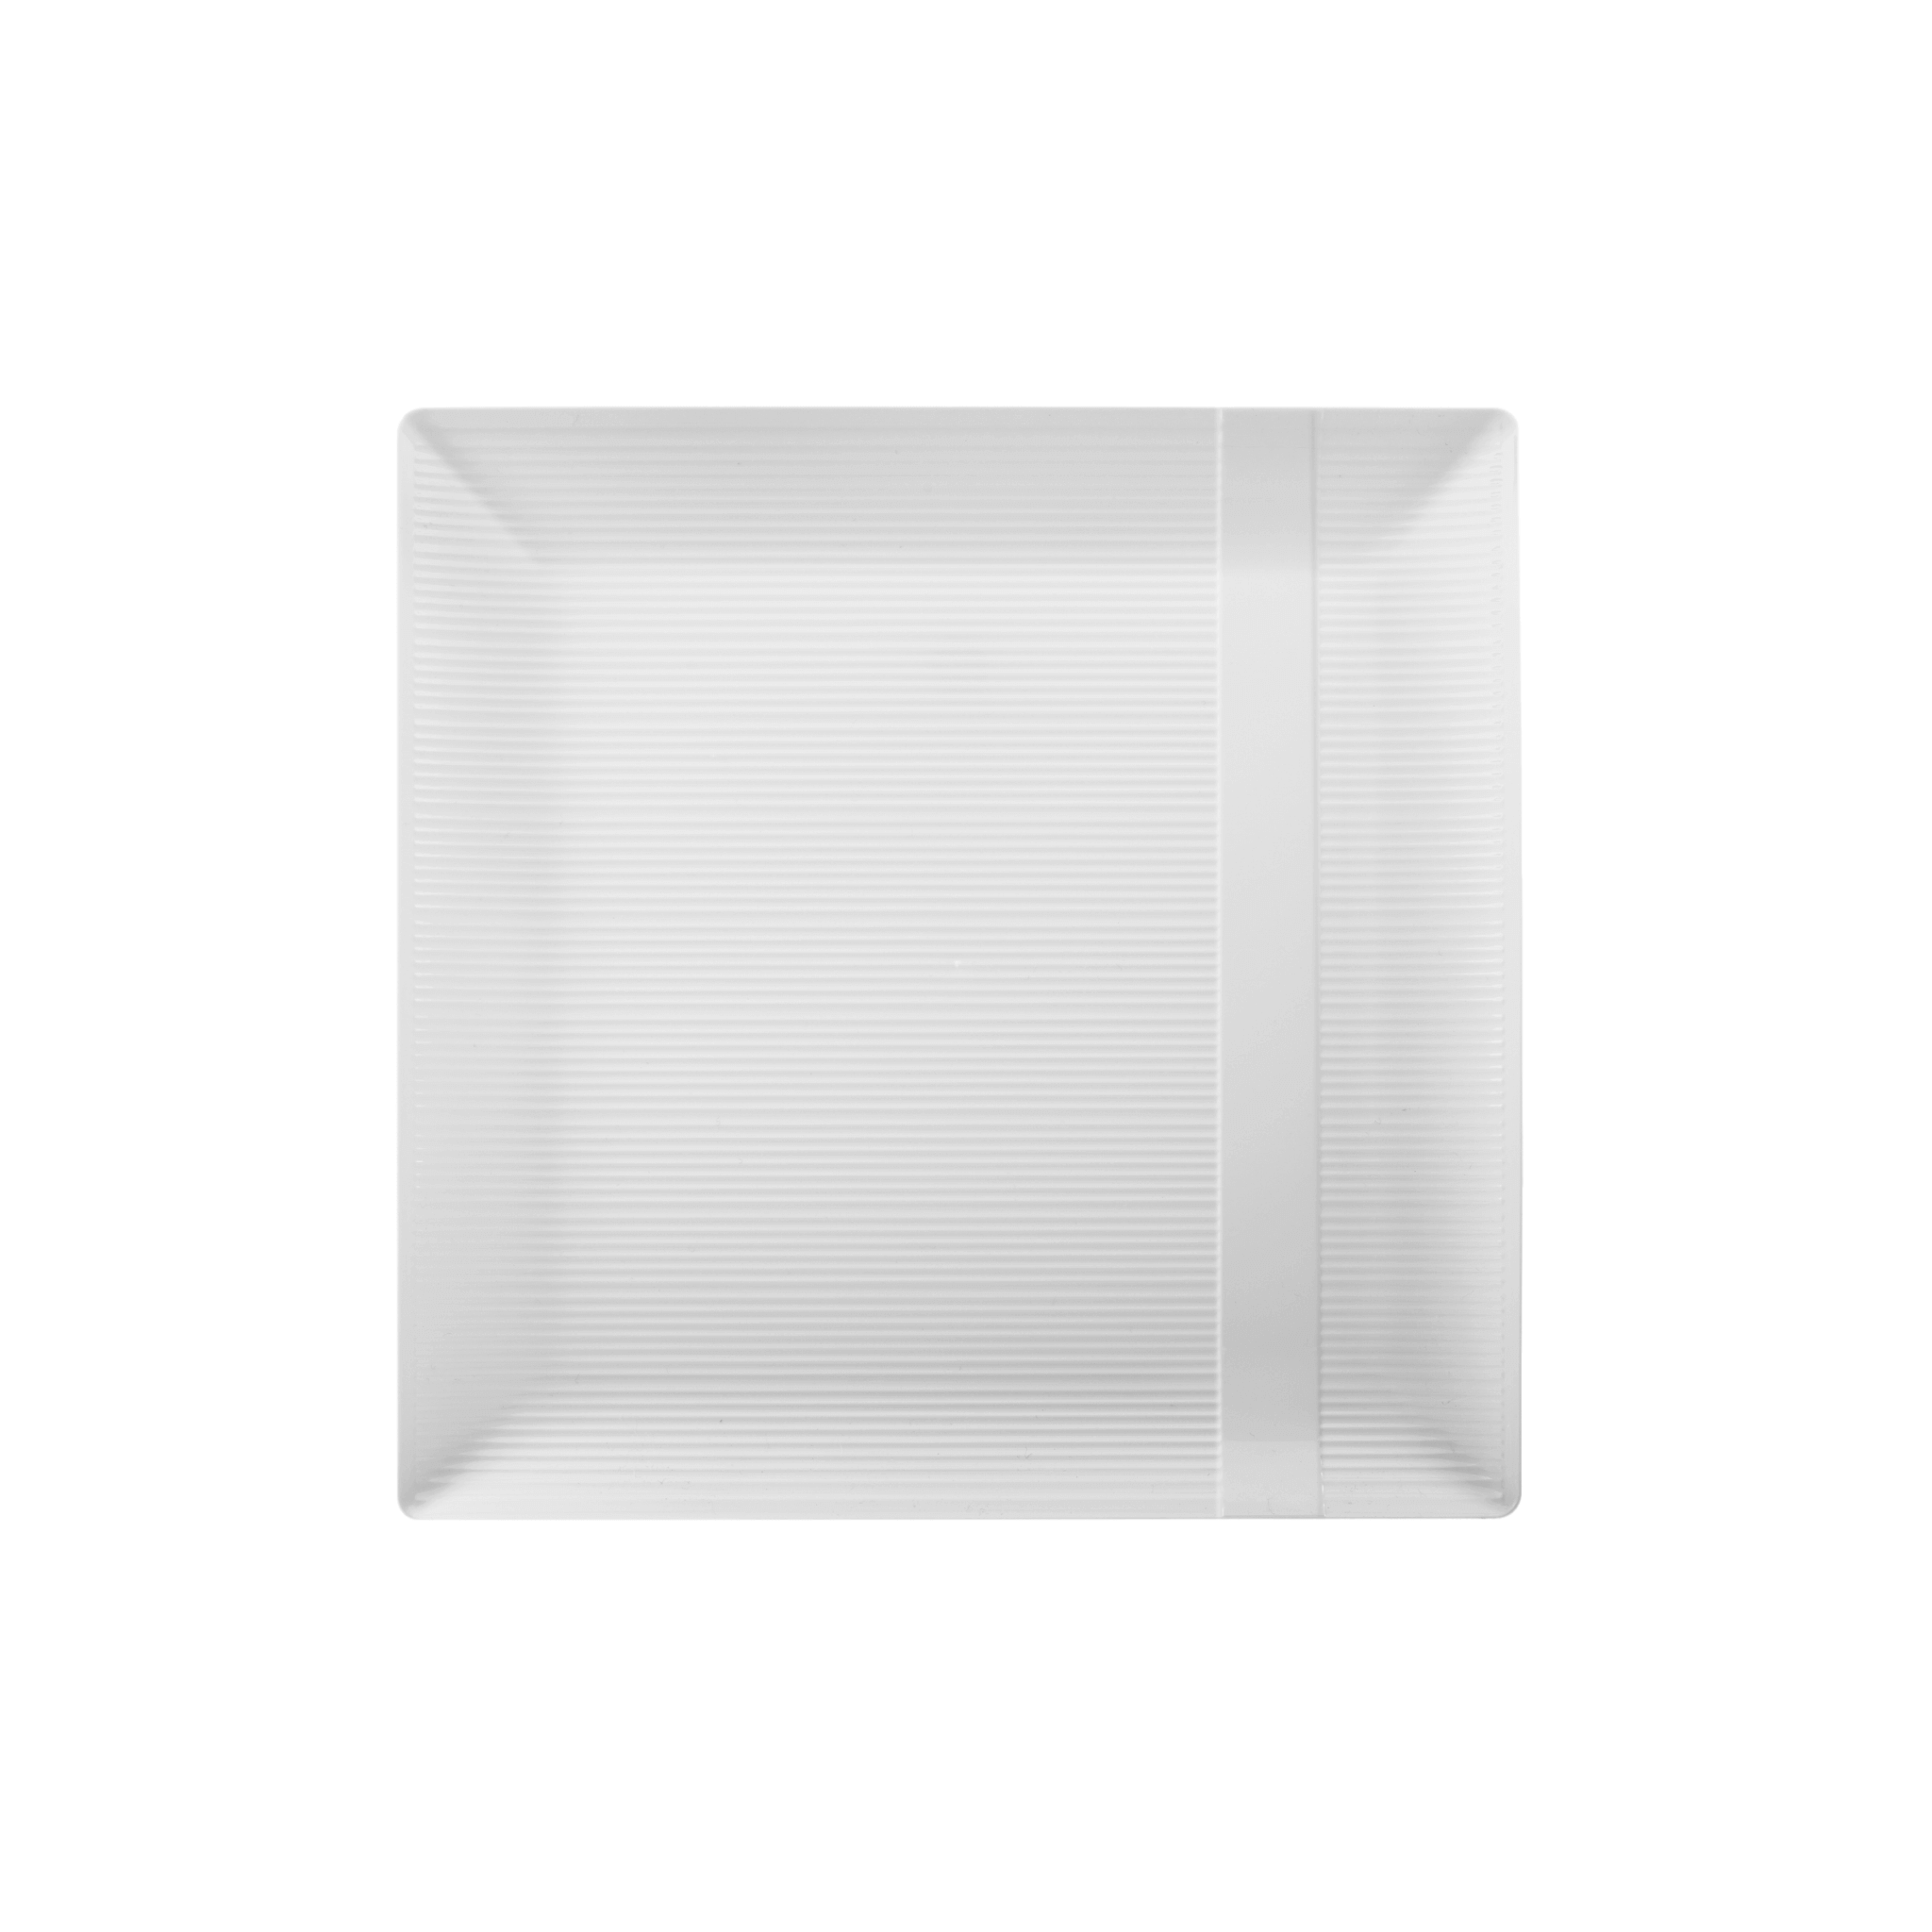 7.5" Zen Ridged White Square Plastic Plates (120 Count) - Yom Tov Settings